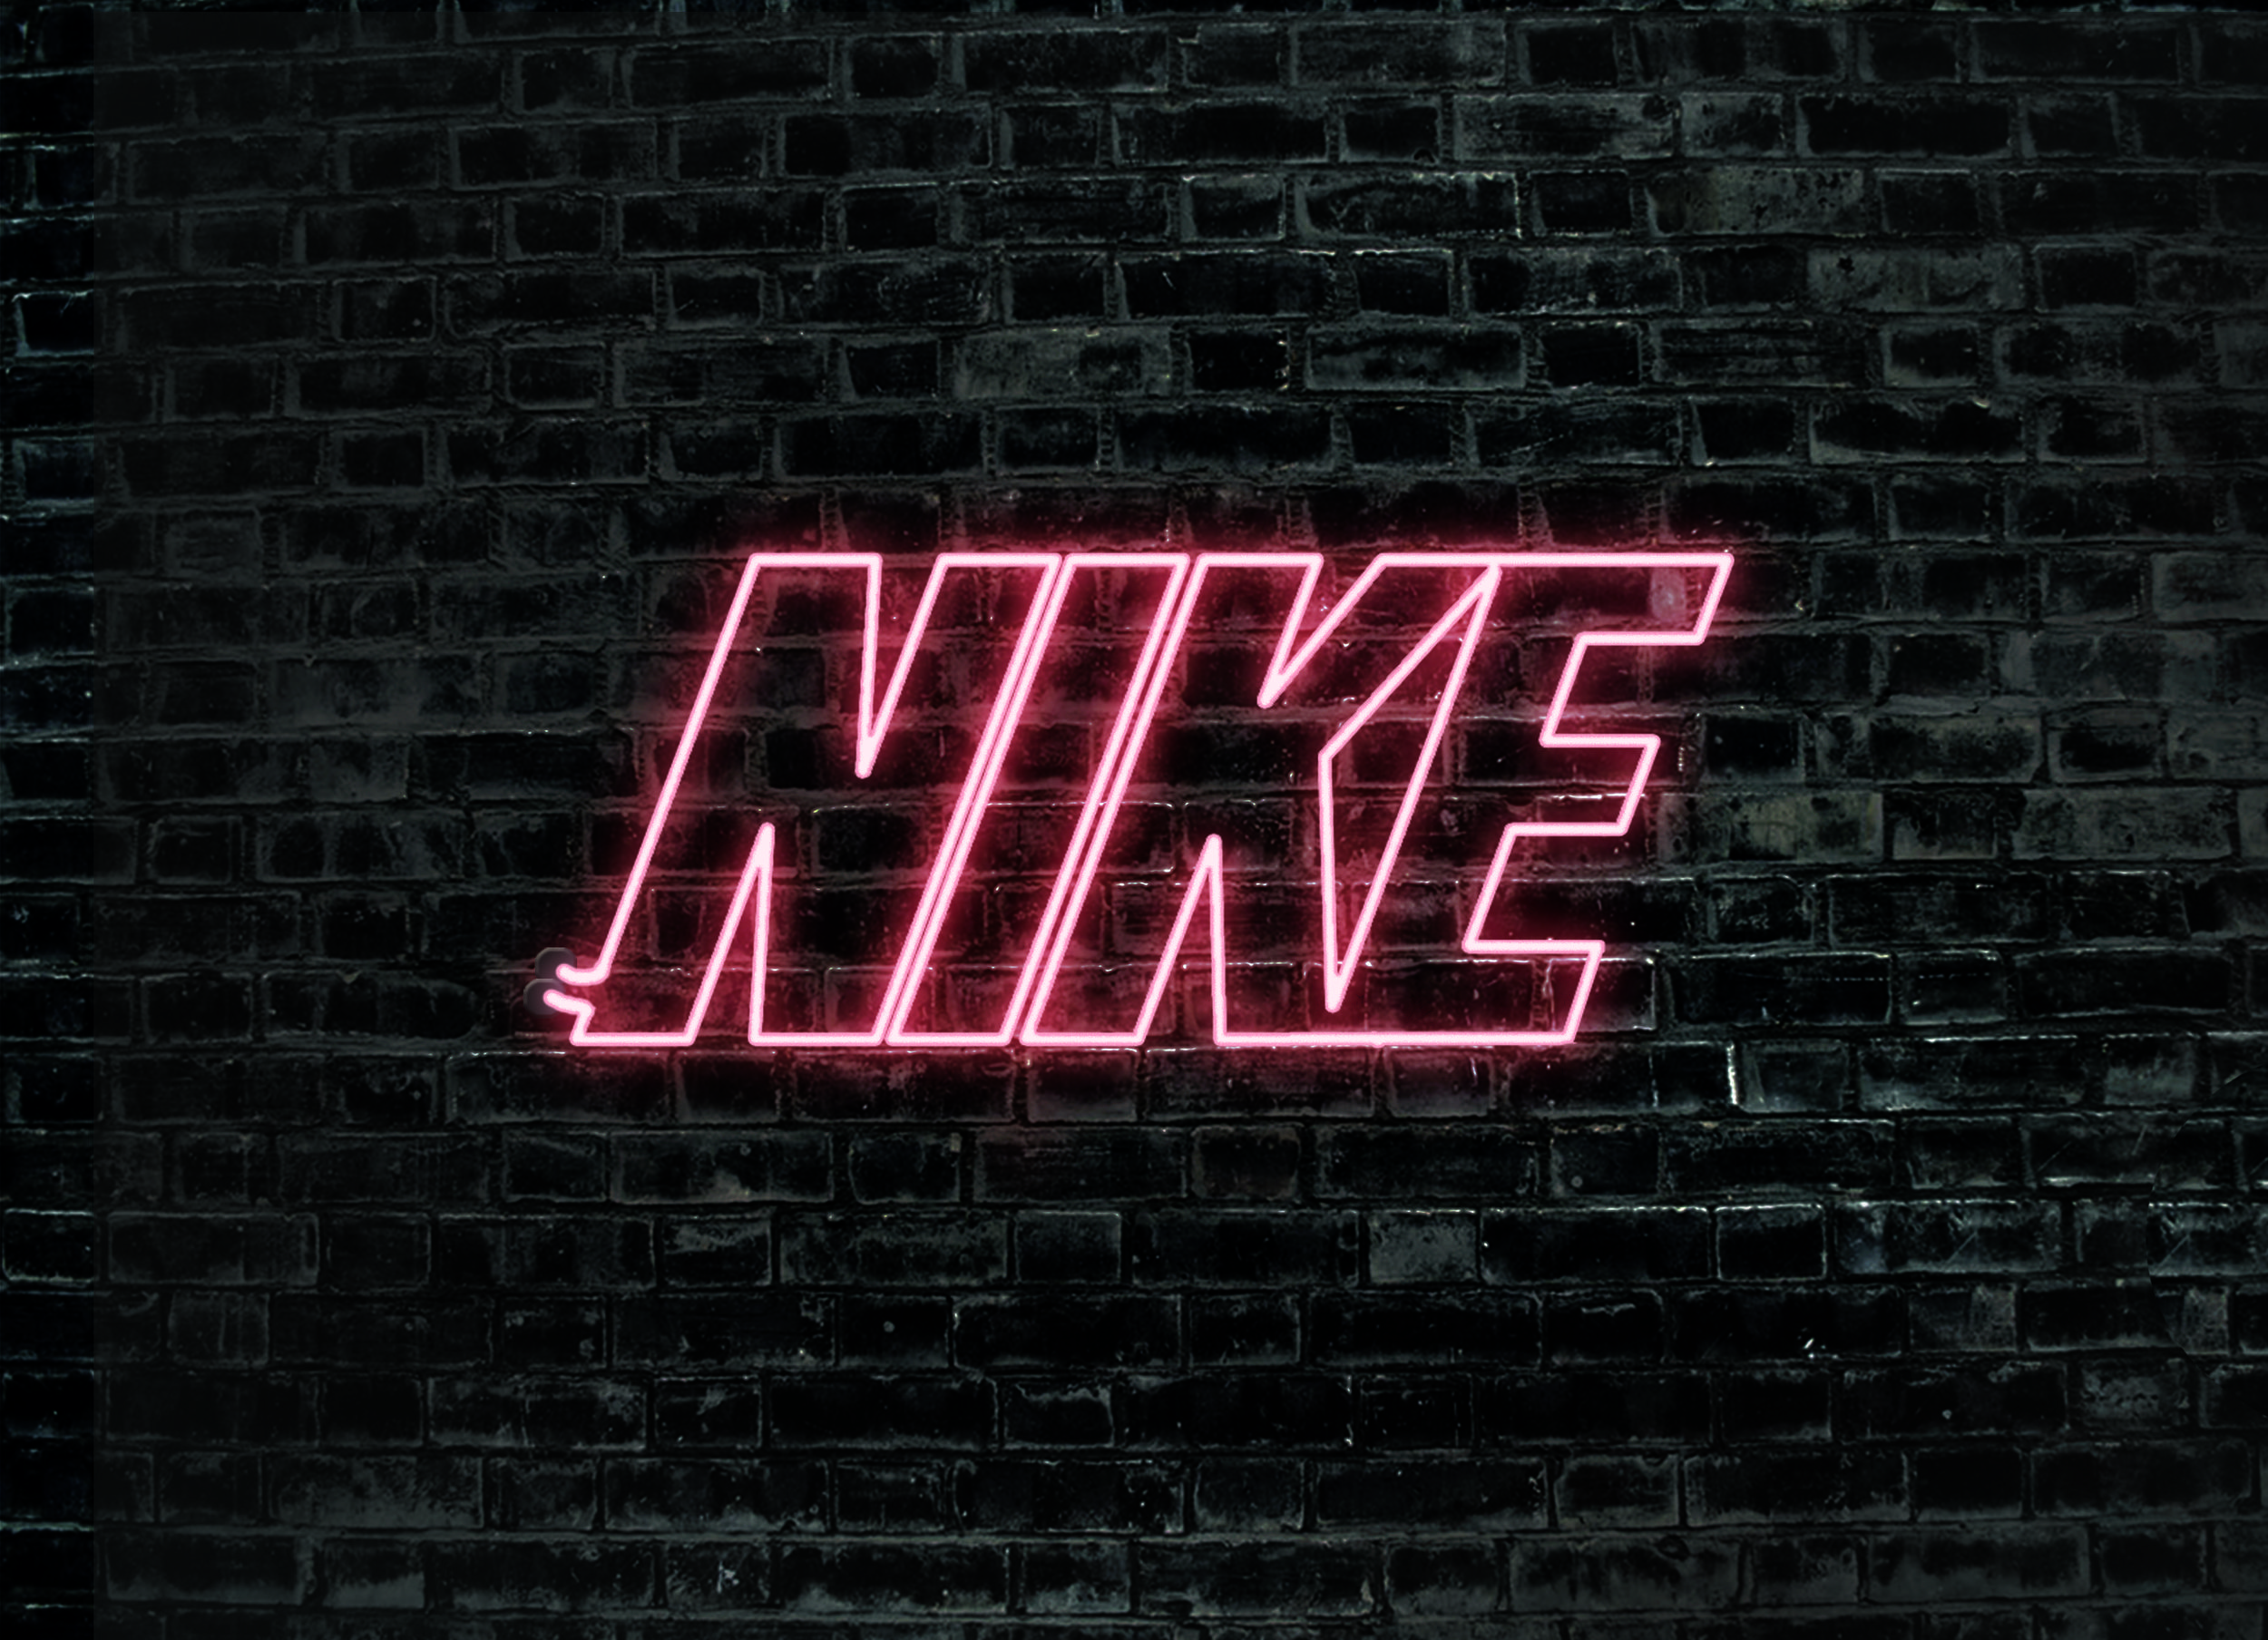 Aesthetic Nike Wallpapers - Wallpaper Cave